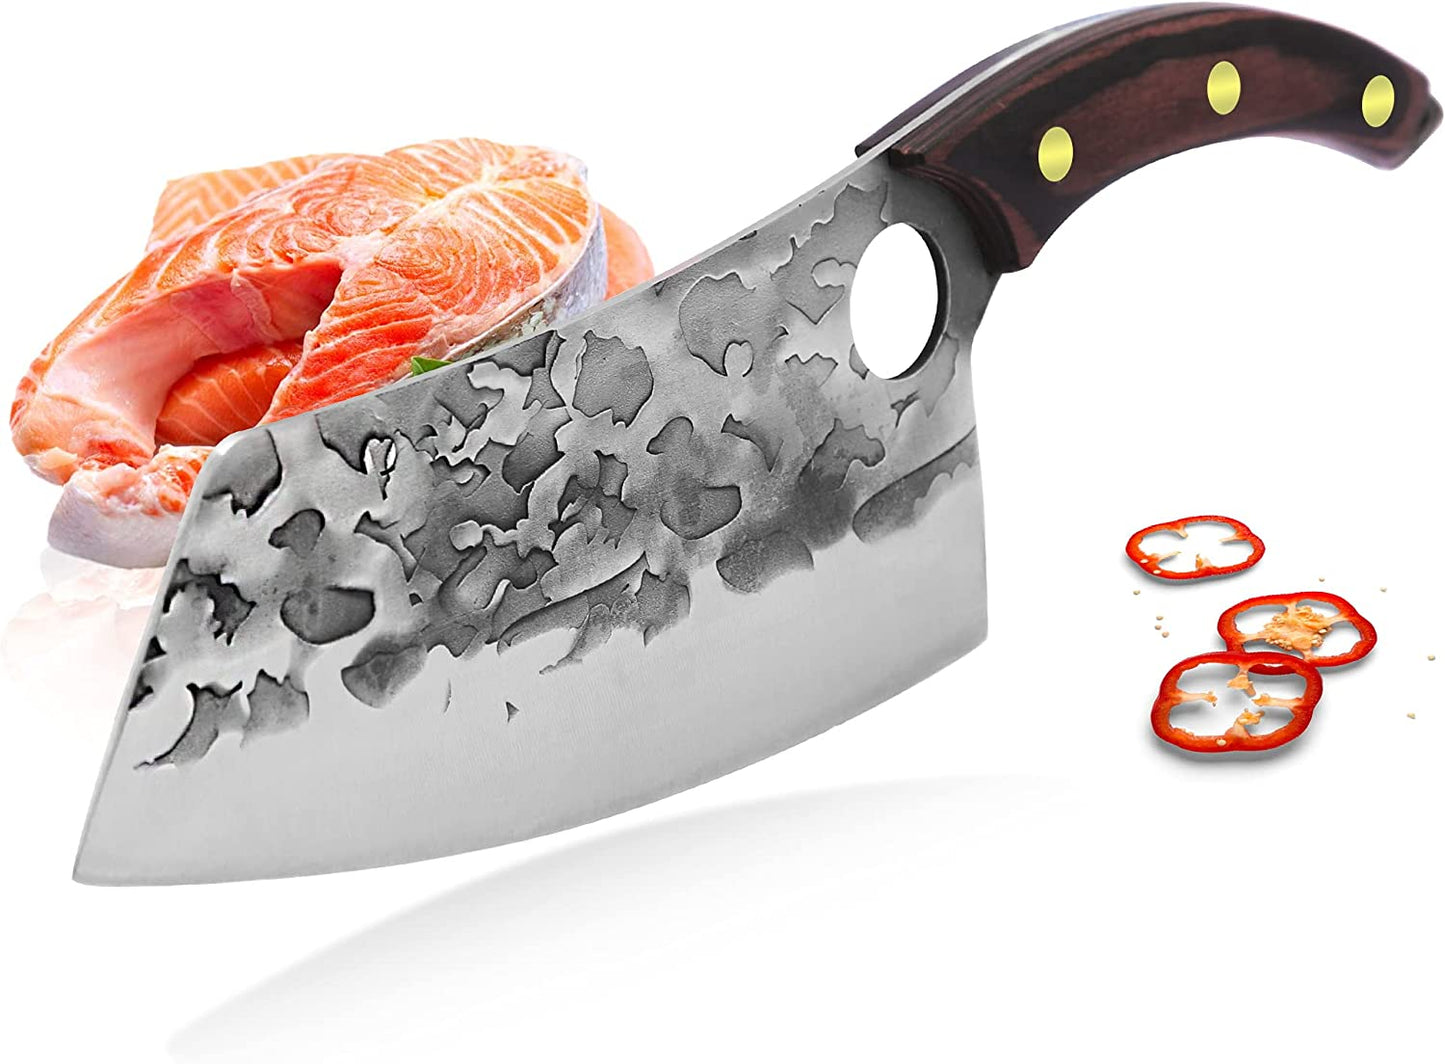 7.5” Full Tang Chopping Knife Ultra Sharp High Carbon Steel Meat Slicing Vegetable Chopper Fixed Non-Stick Hammer Blade Finger Hole Effort Saving Design